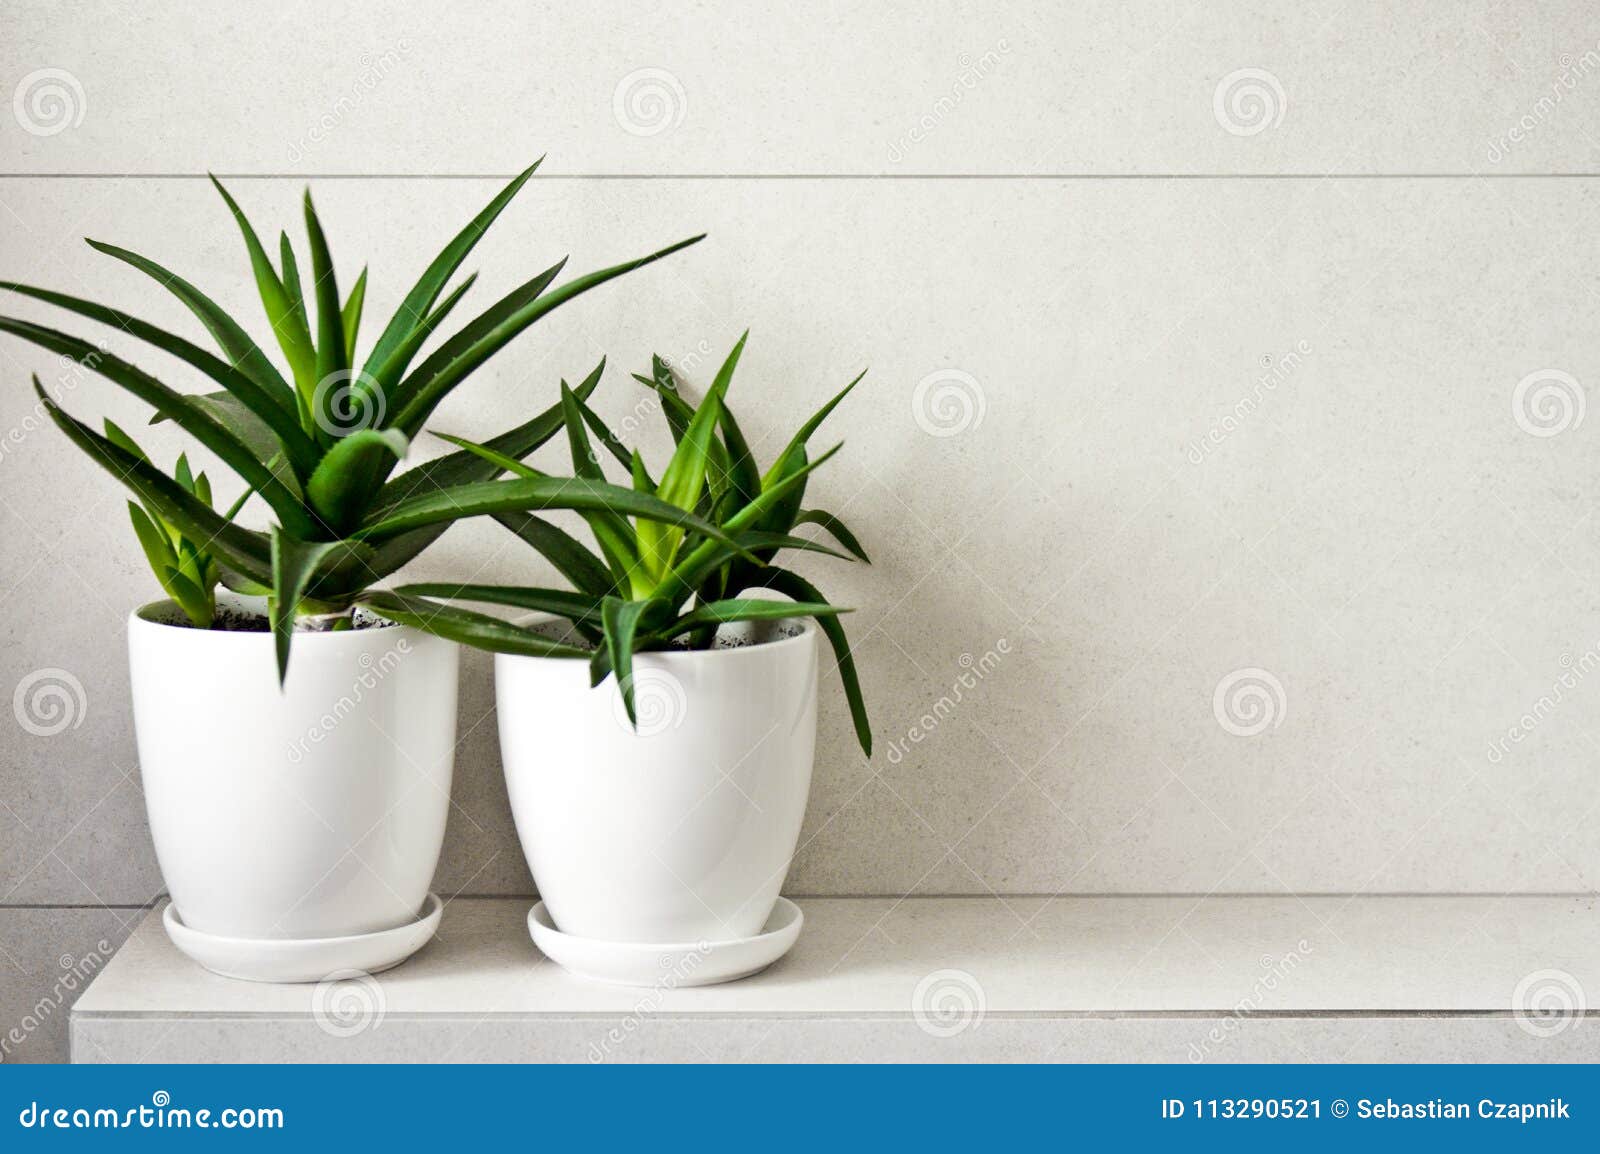 Medical Herb Aloe Vera In Pots On Bathroom Shelf Stock Image